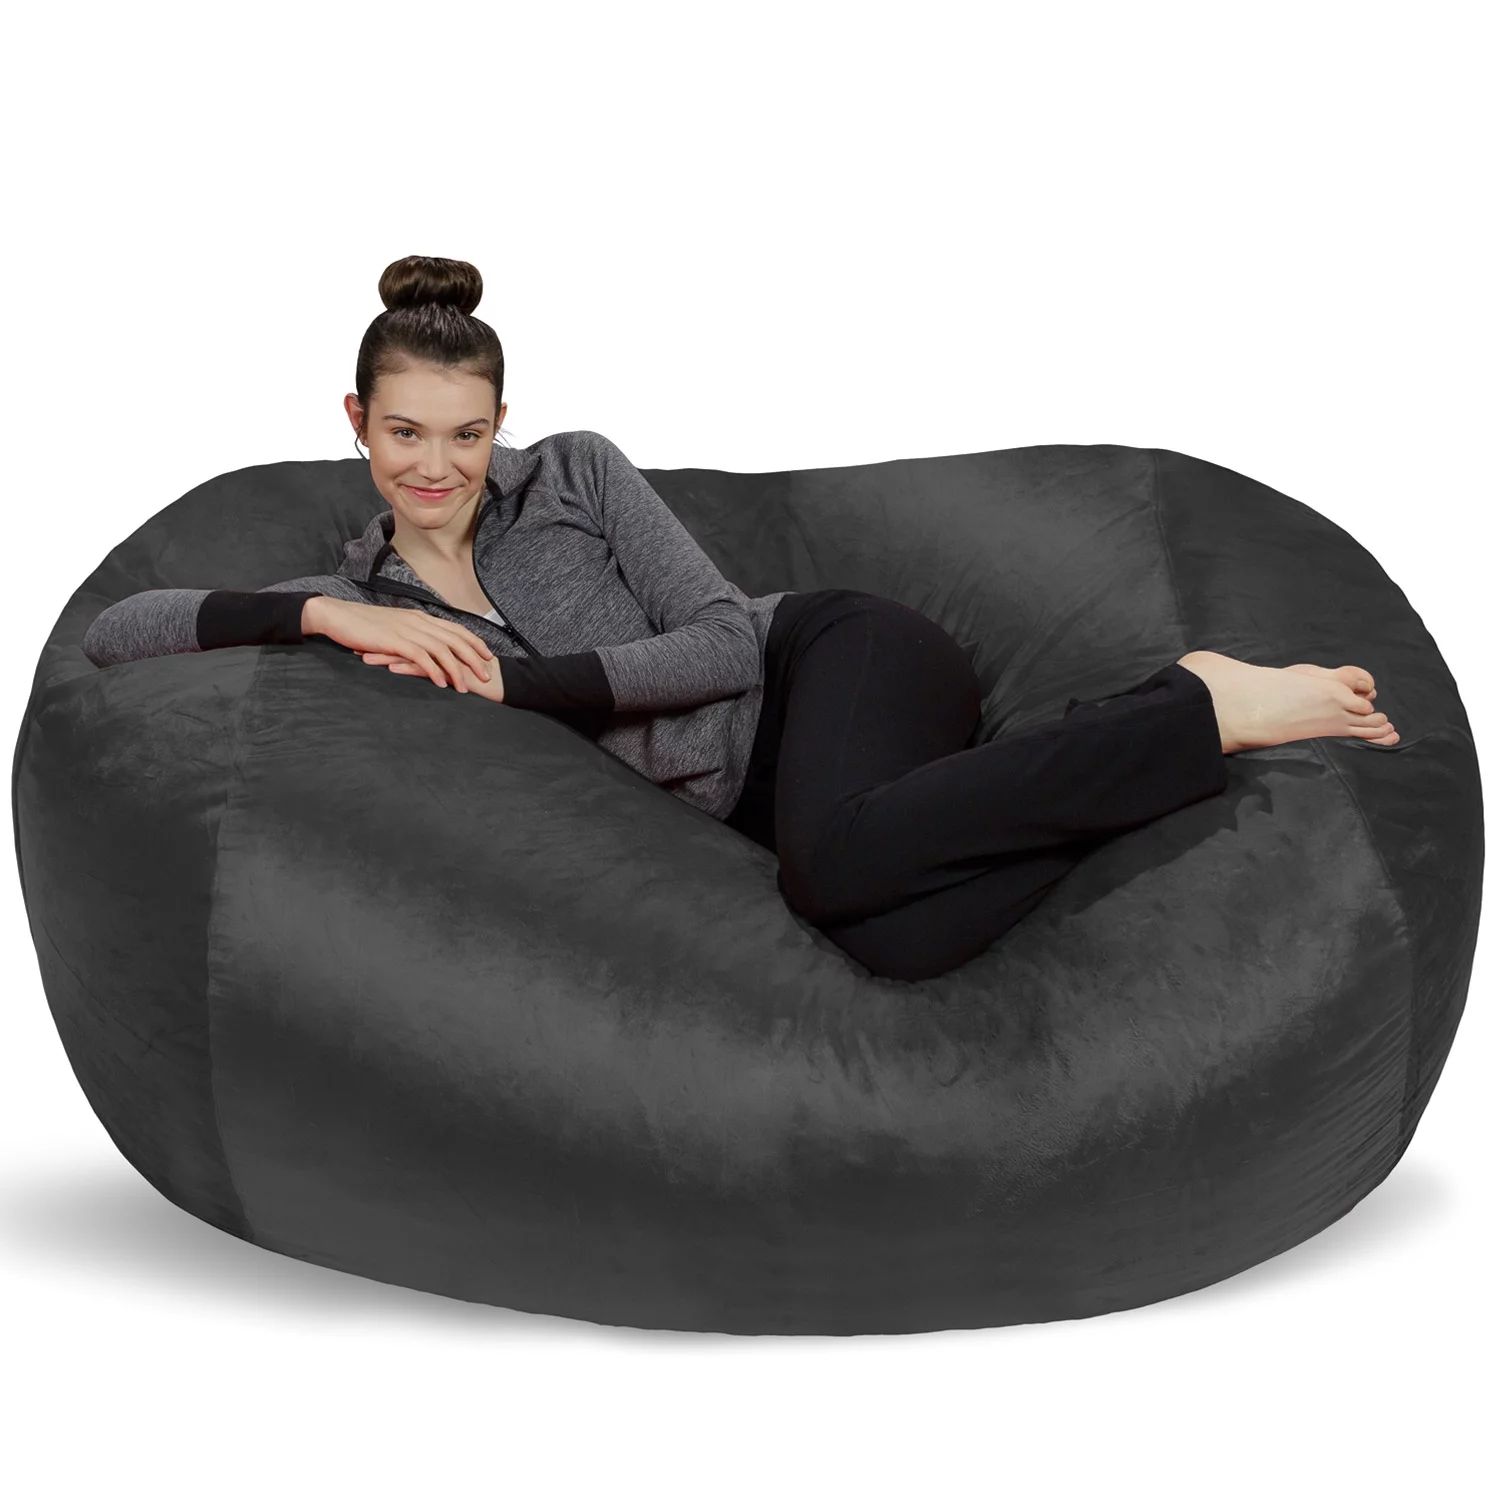 Sofa Sack 6 ft Large Bean Bag Lounger, Charcoal | Walmart (US)